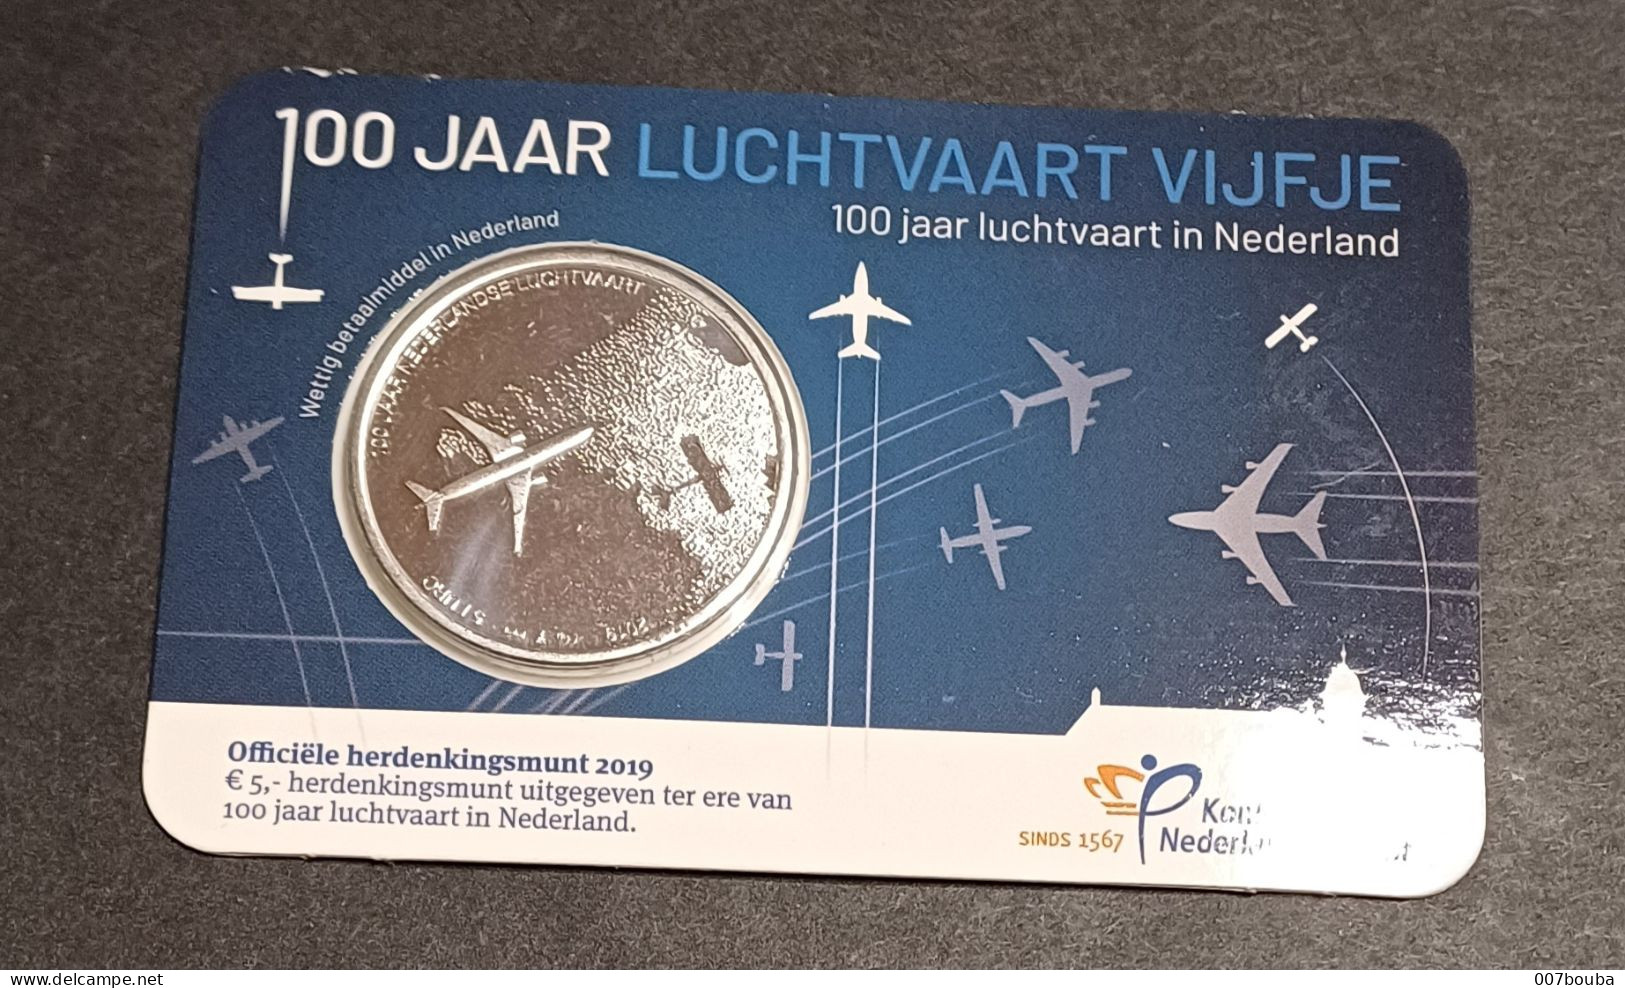 NEDERLAND _ PAYS-BAS 2019 / COINCARD 5 €  / 100 JAAR LUCHTVAART VIJFJE / ETAT NEUF! - Pays-Bas